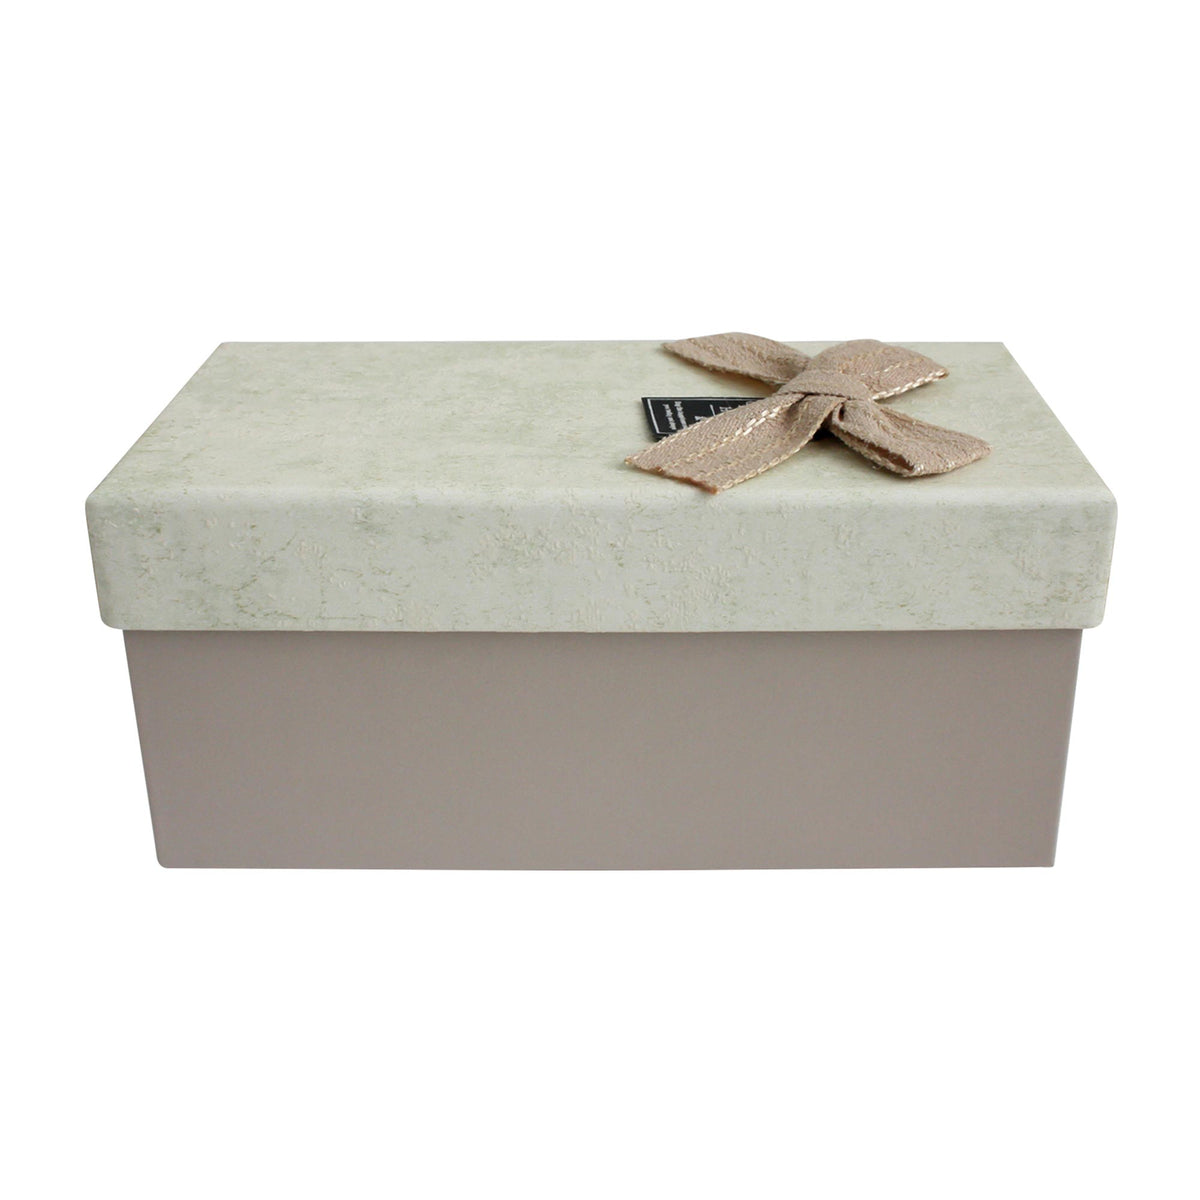 Single Textured Brown/Beige Gift Box